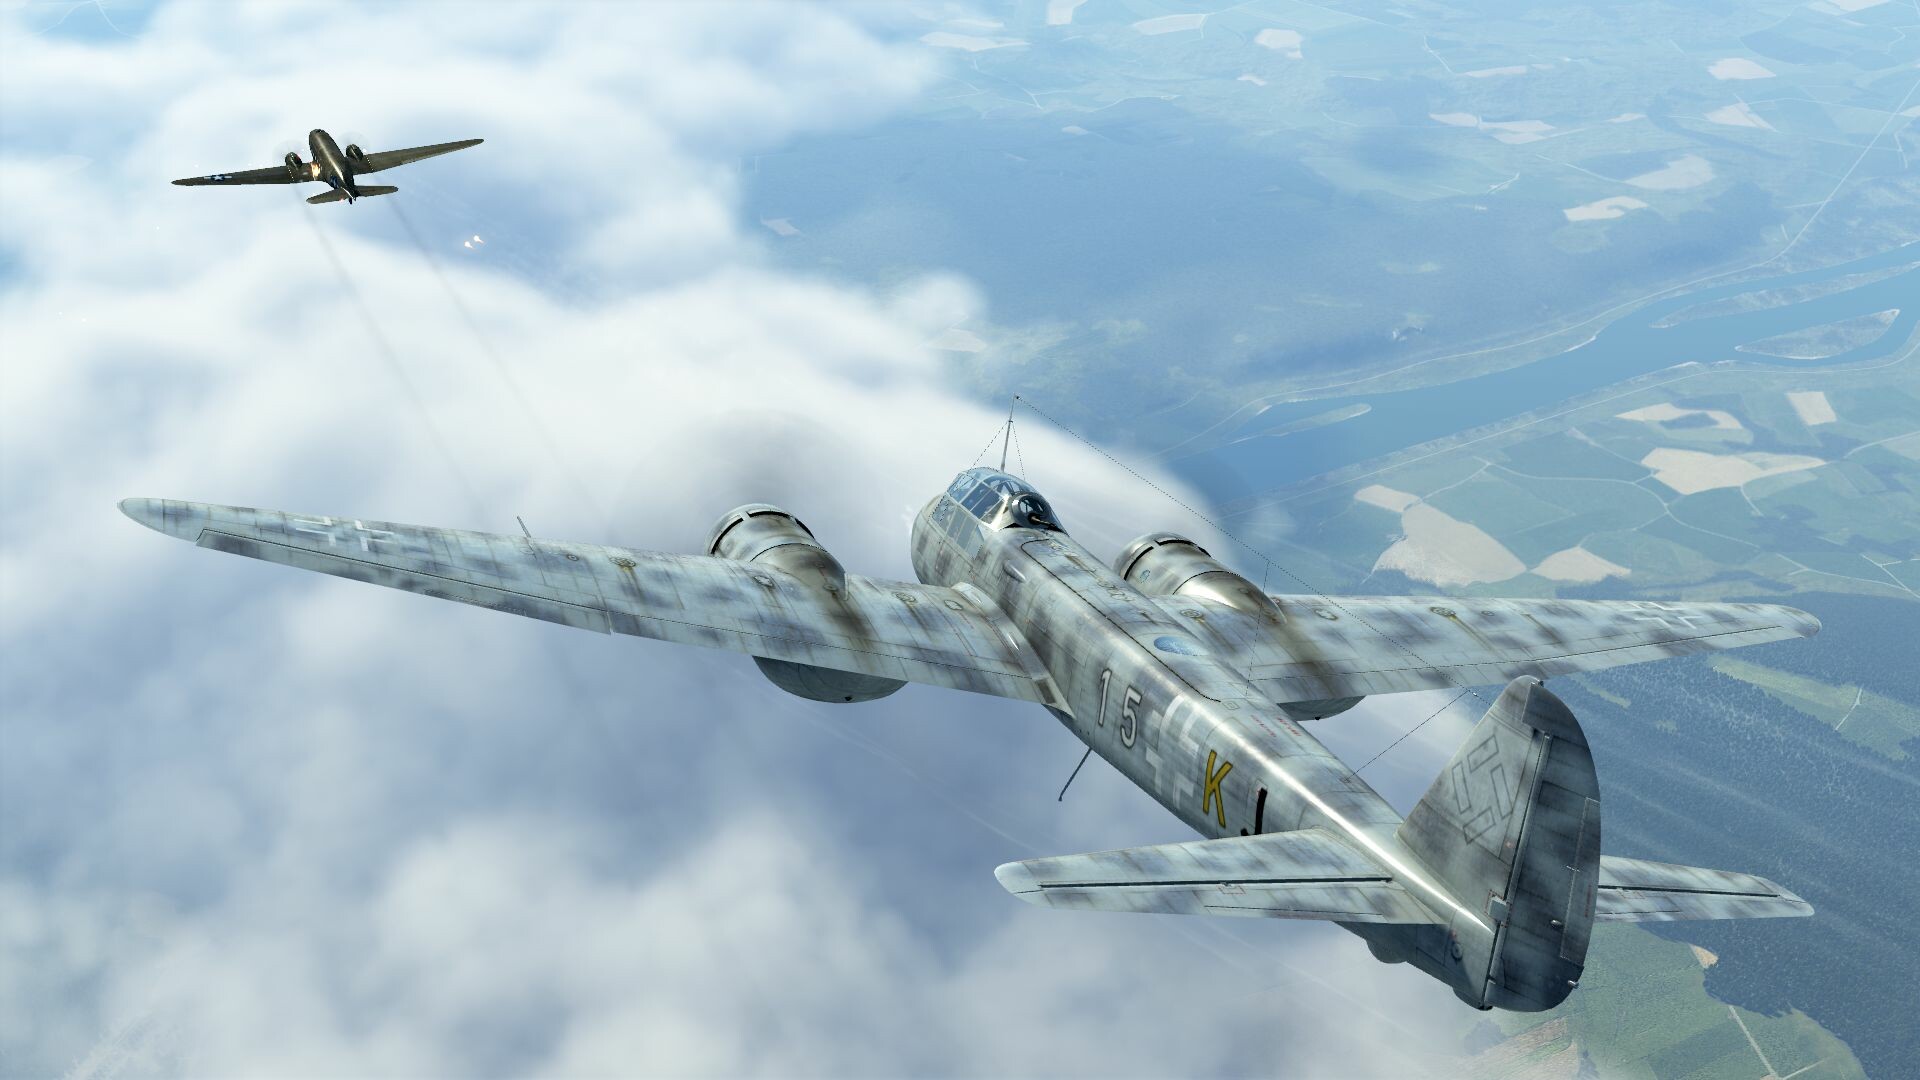 6 88 c. Юнкерс 88 бомбардировщик. Il 2 Sturmovik Battle of Stalingrad. Ju 88 c-6. Ил-2 Штурмовик Великие сражения.